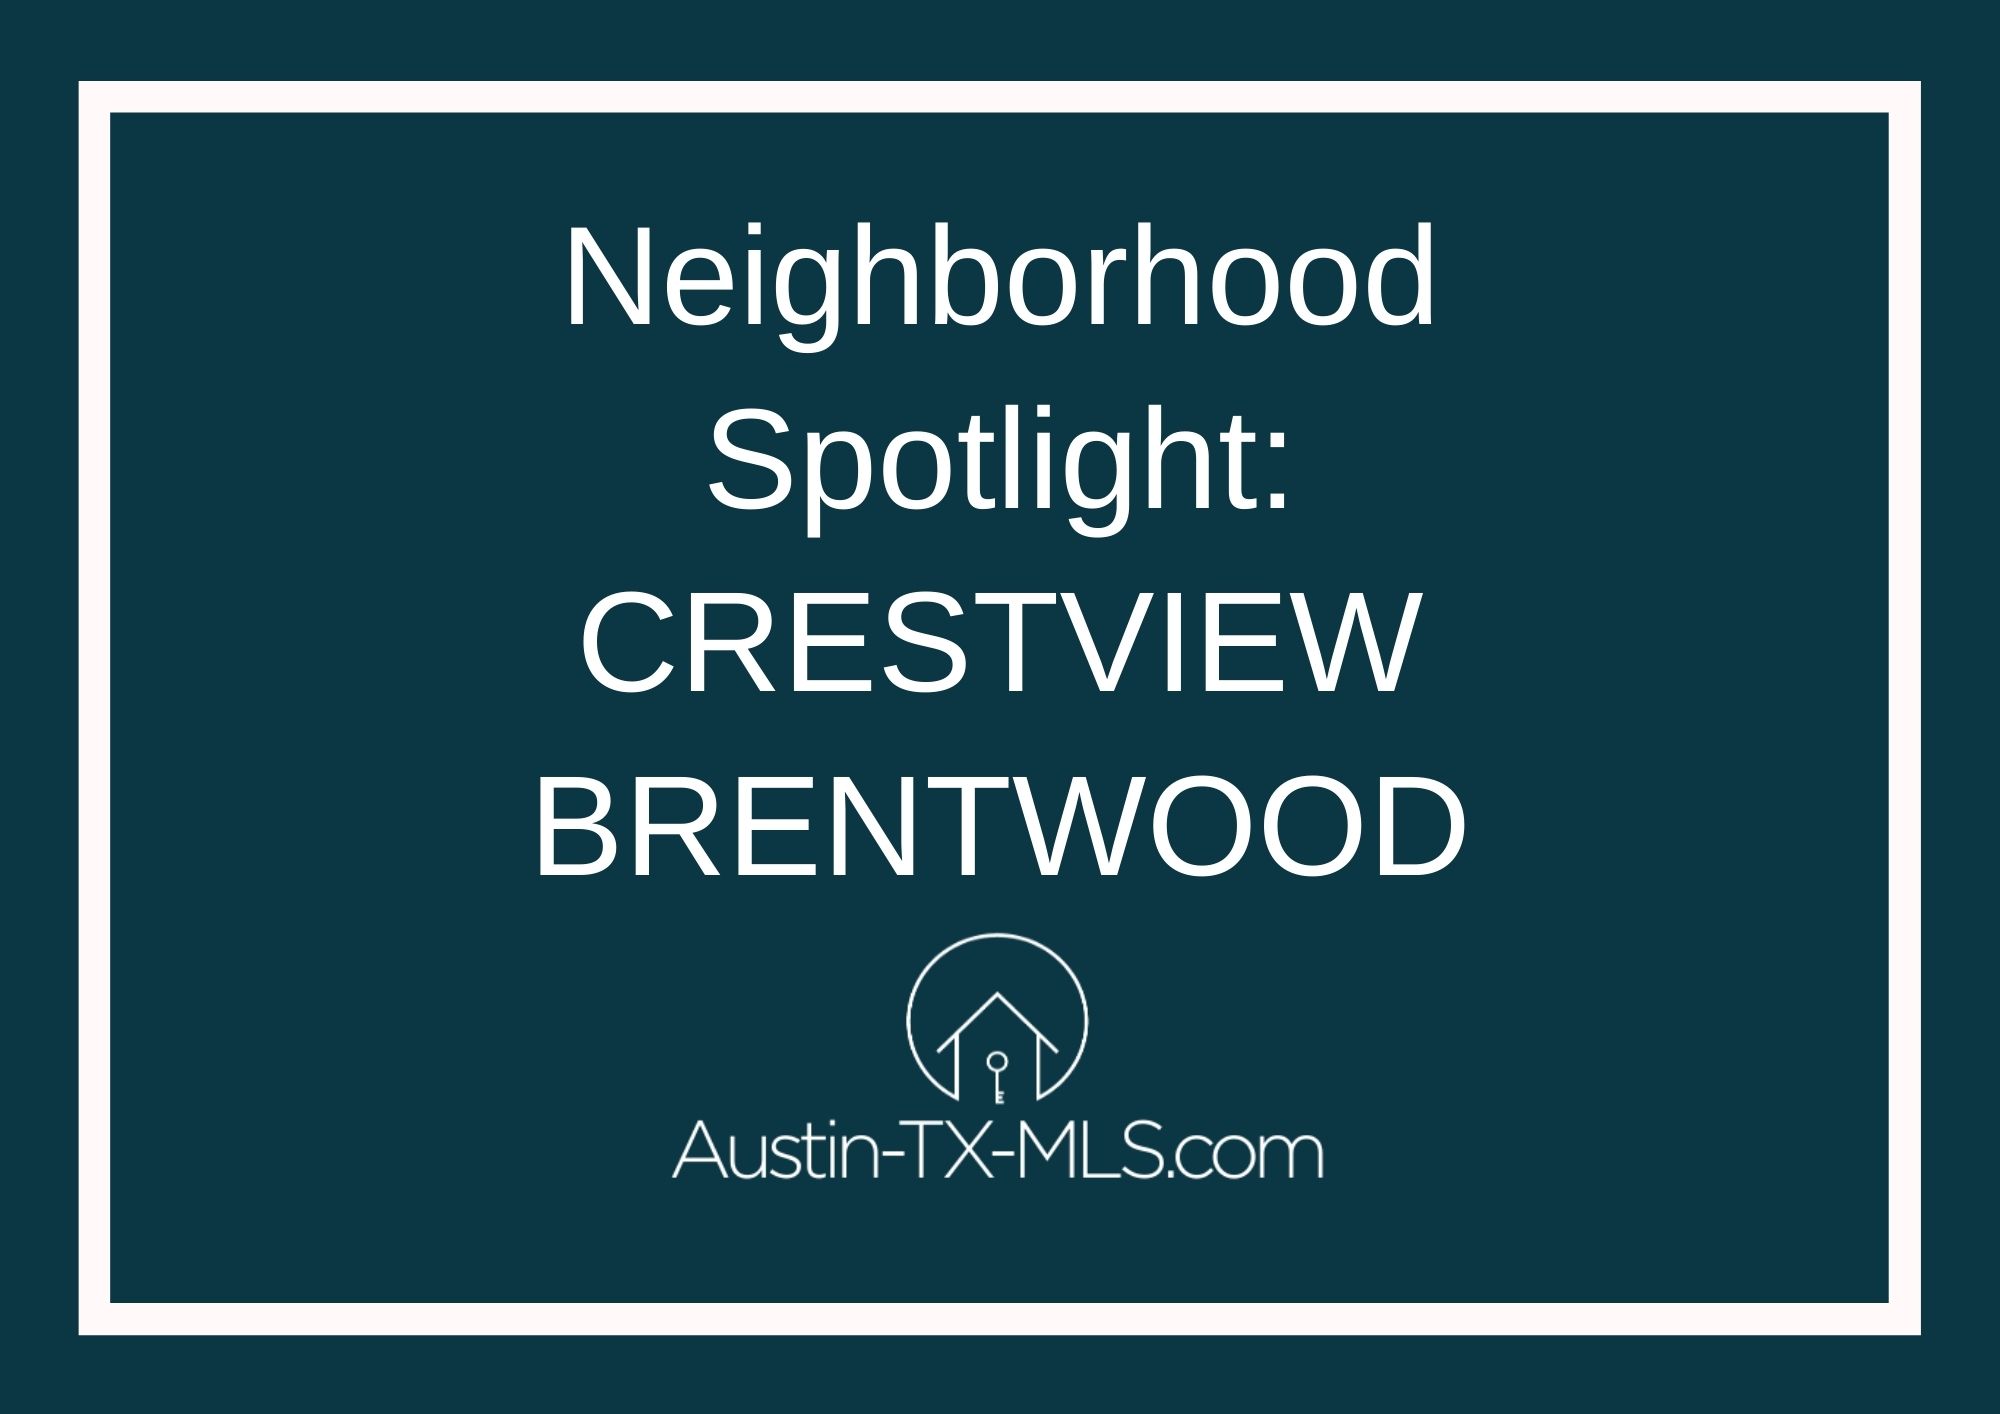 Crestview_Brentwood Neighborhood Spotlight Austin Texas real estate